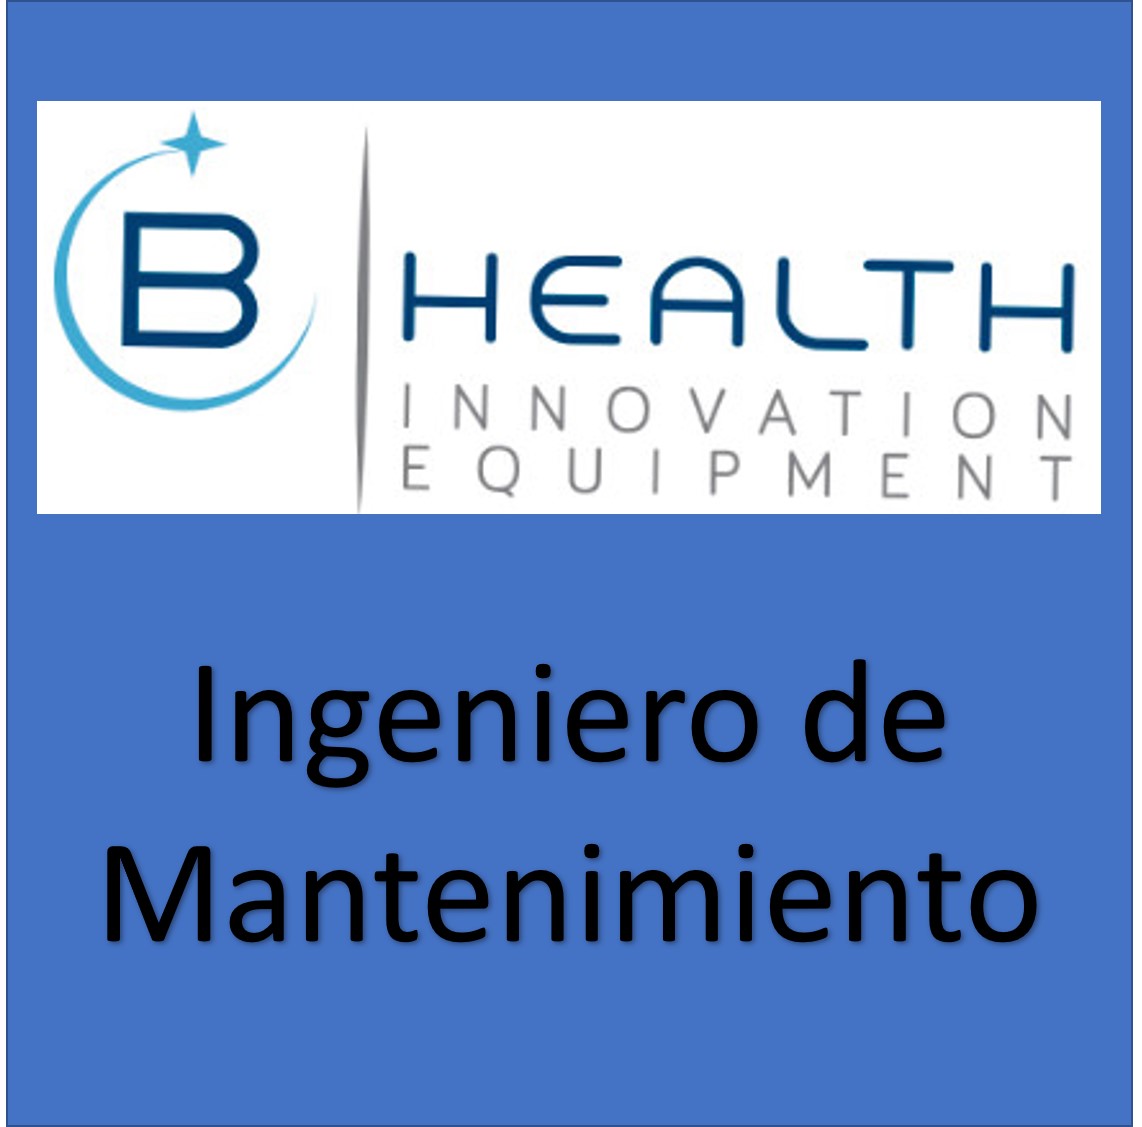 Ingeniero de Mantenimiento - B Health Innovation Equipment